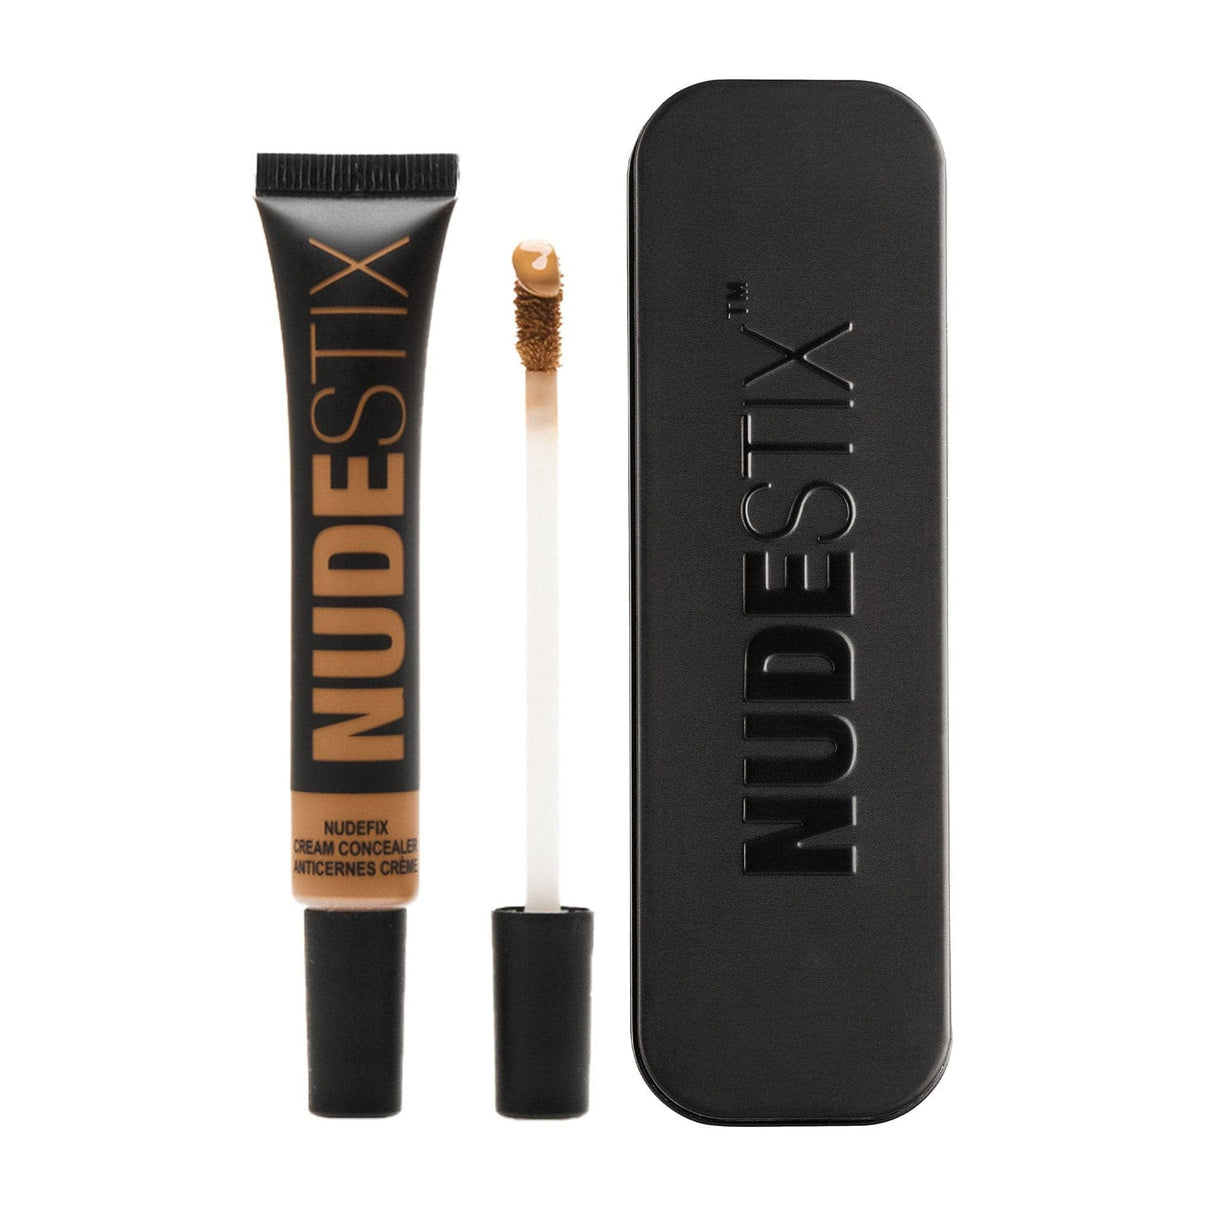 Nudefix cream concealer in shade nude 9 with Nudestix can